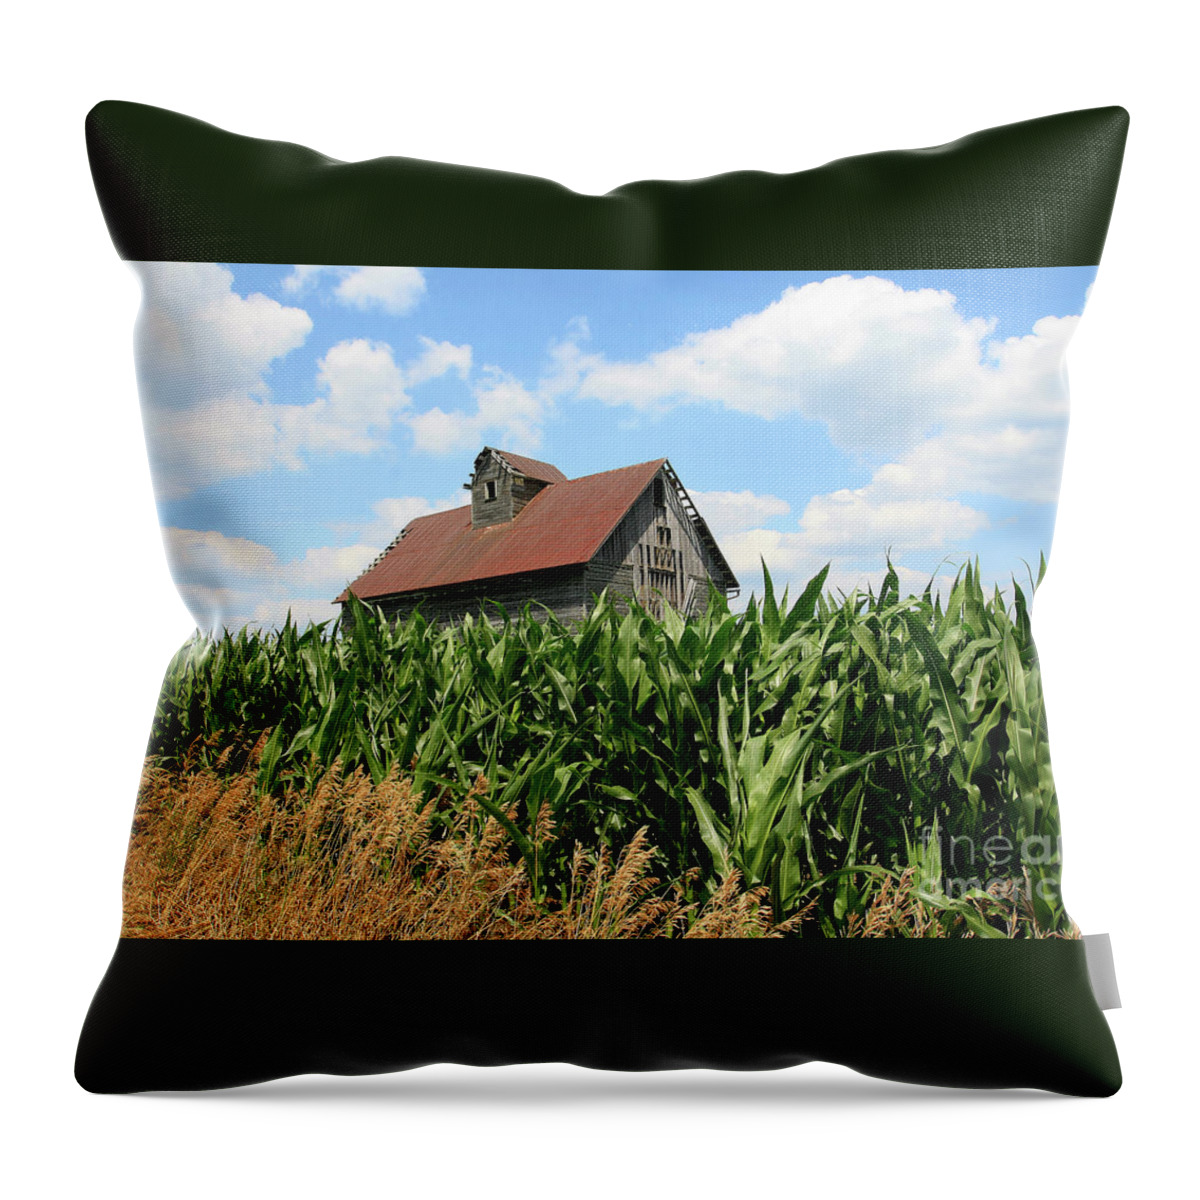 Corn Throw Pillow featuring the photograph Old Corn Crib by Paula Guttilla